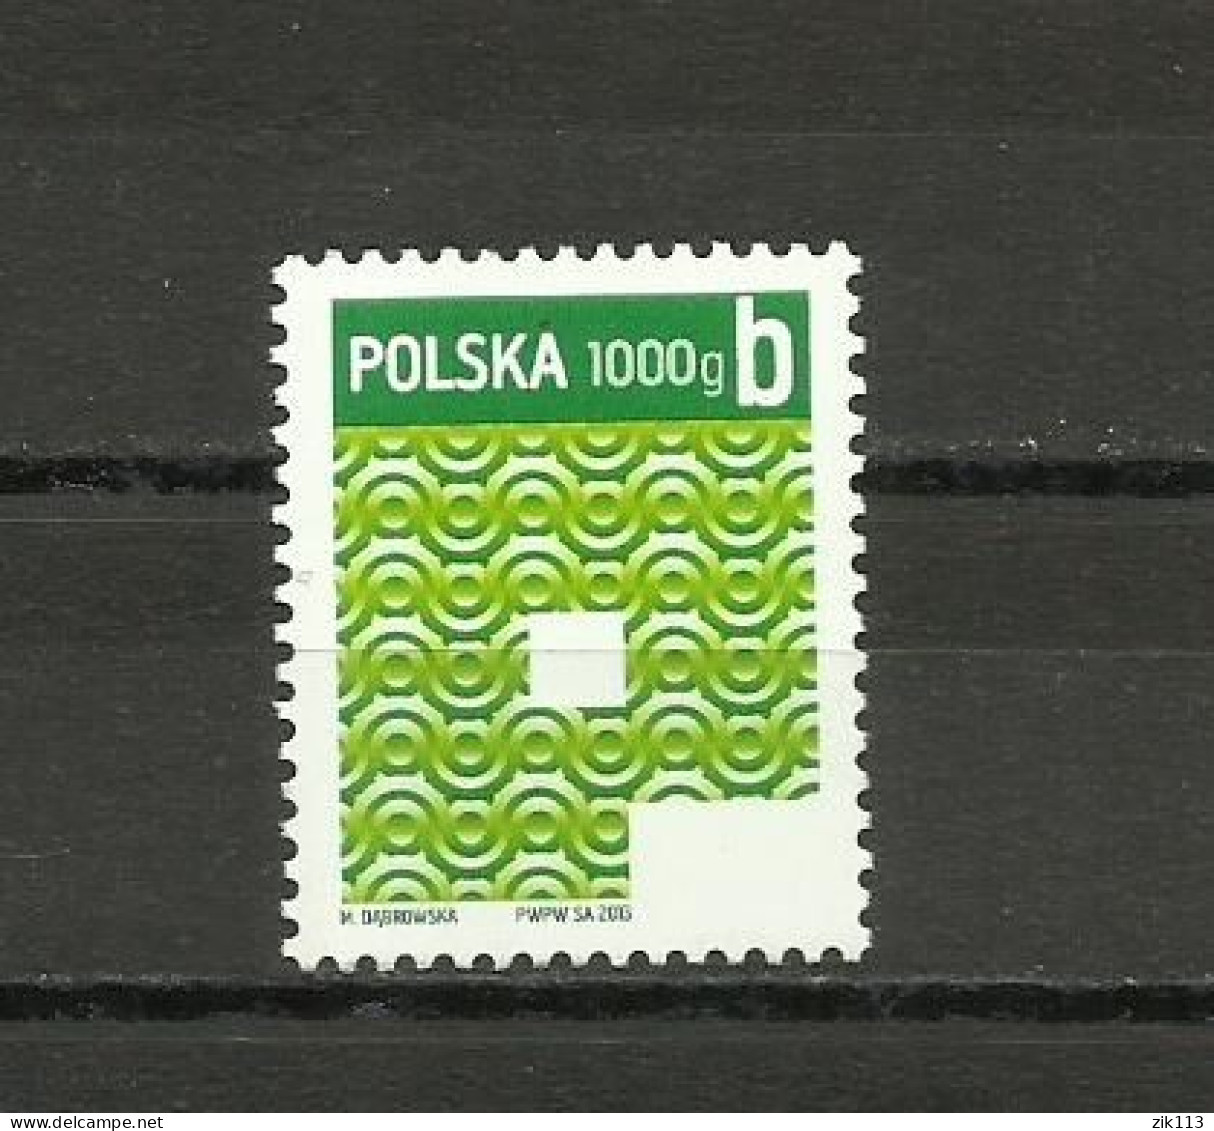 POLAND 2013 - ECONOMIC  STAMP, MNH - Unused Stamps